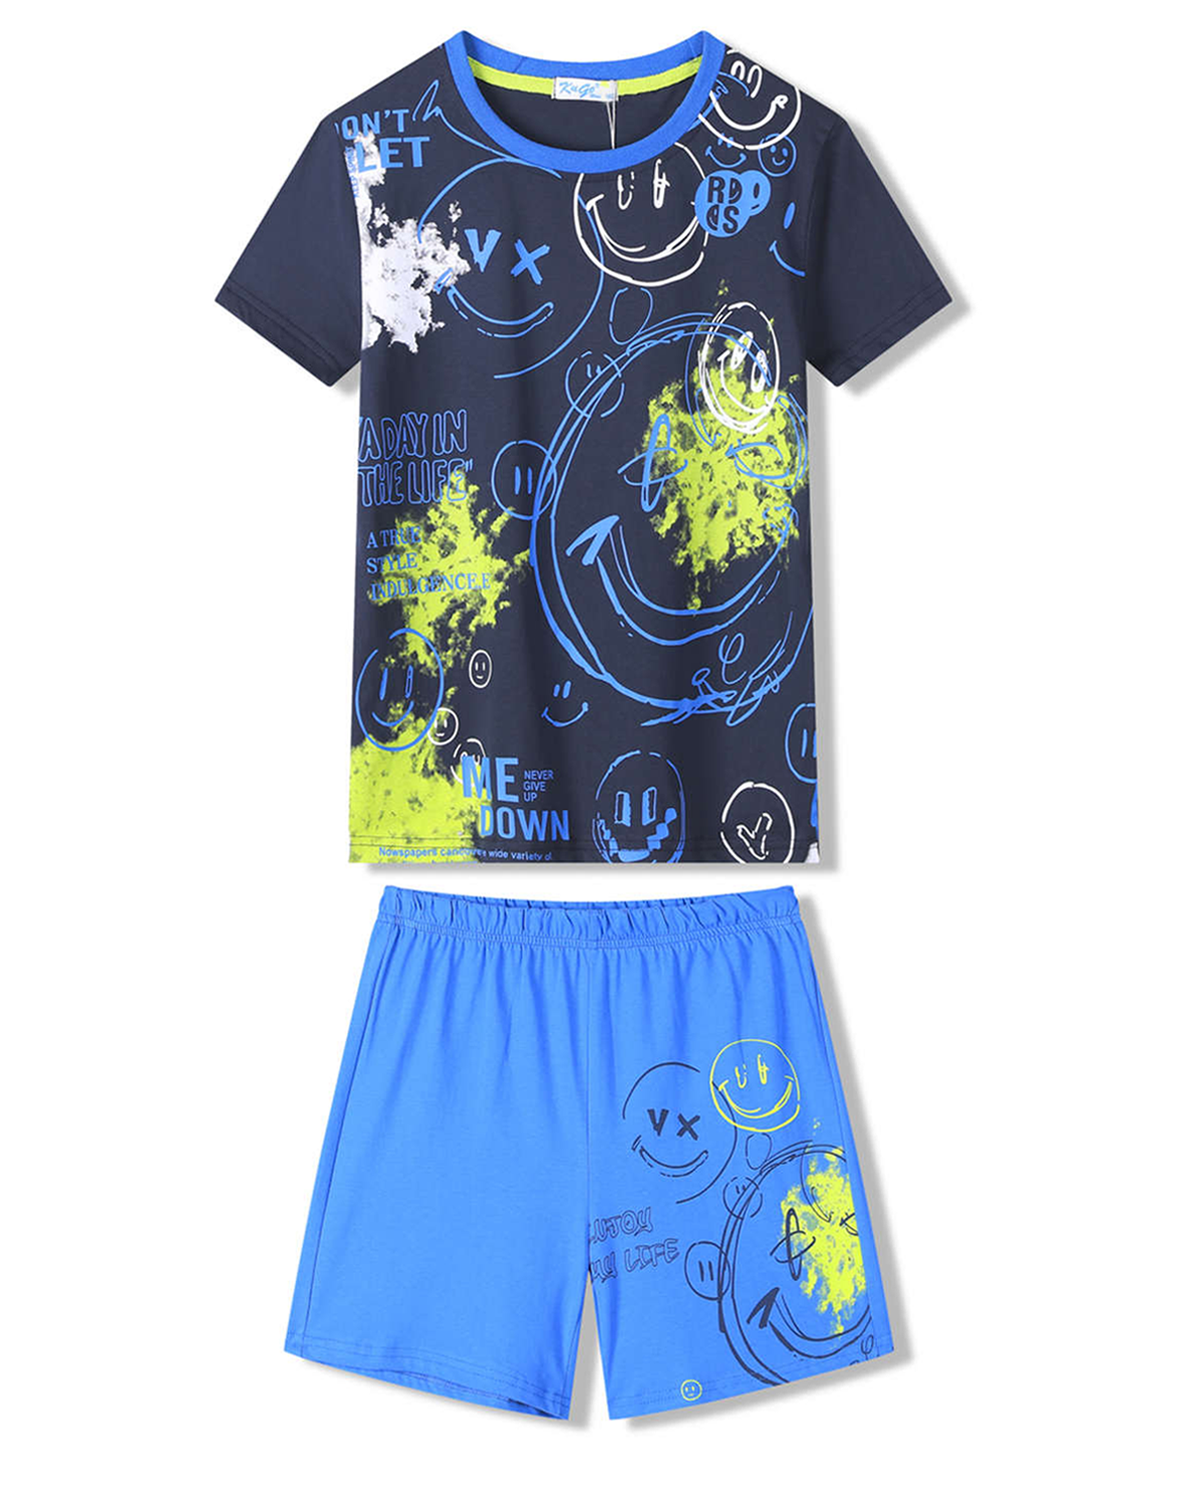 Chlapecké pyžamo - KUGO WT7316, tmavě modrá Barva: Modrá tmavě, Velikost: 164